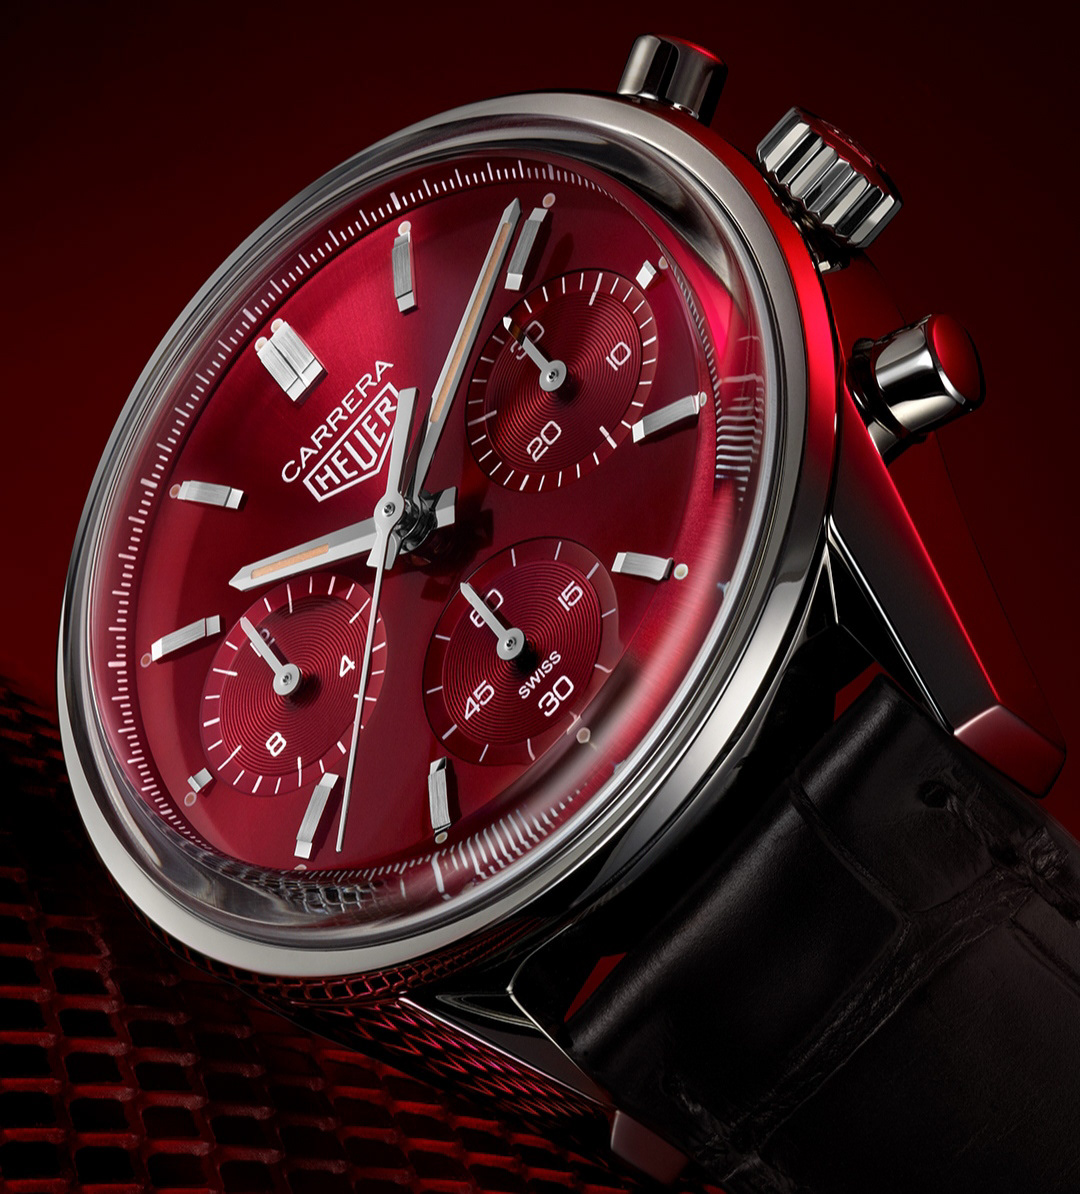 #Design #formula1 #precision #watches